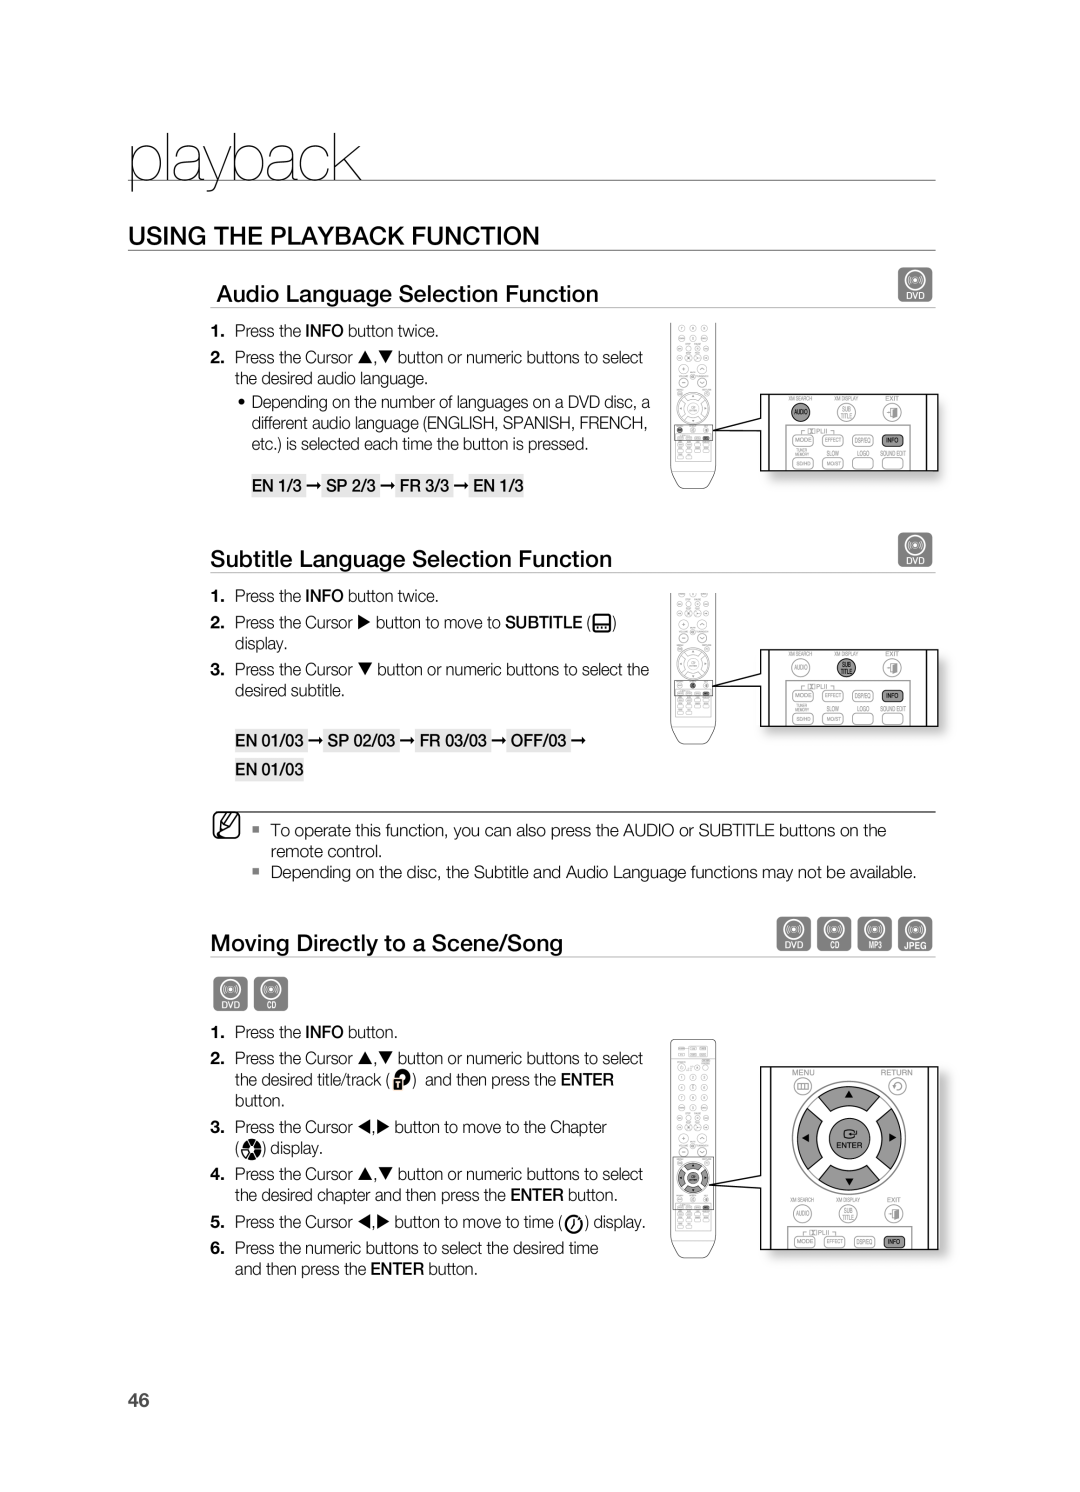 Samsung HT-TZ515 user manual dBAG, playback, USINg THE PLAYBACK FUNCTION, Audio Language Selection Function 